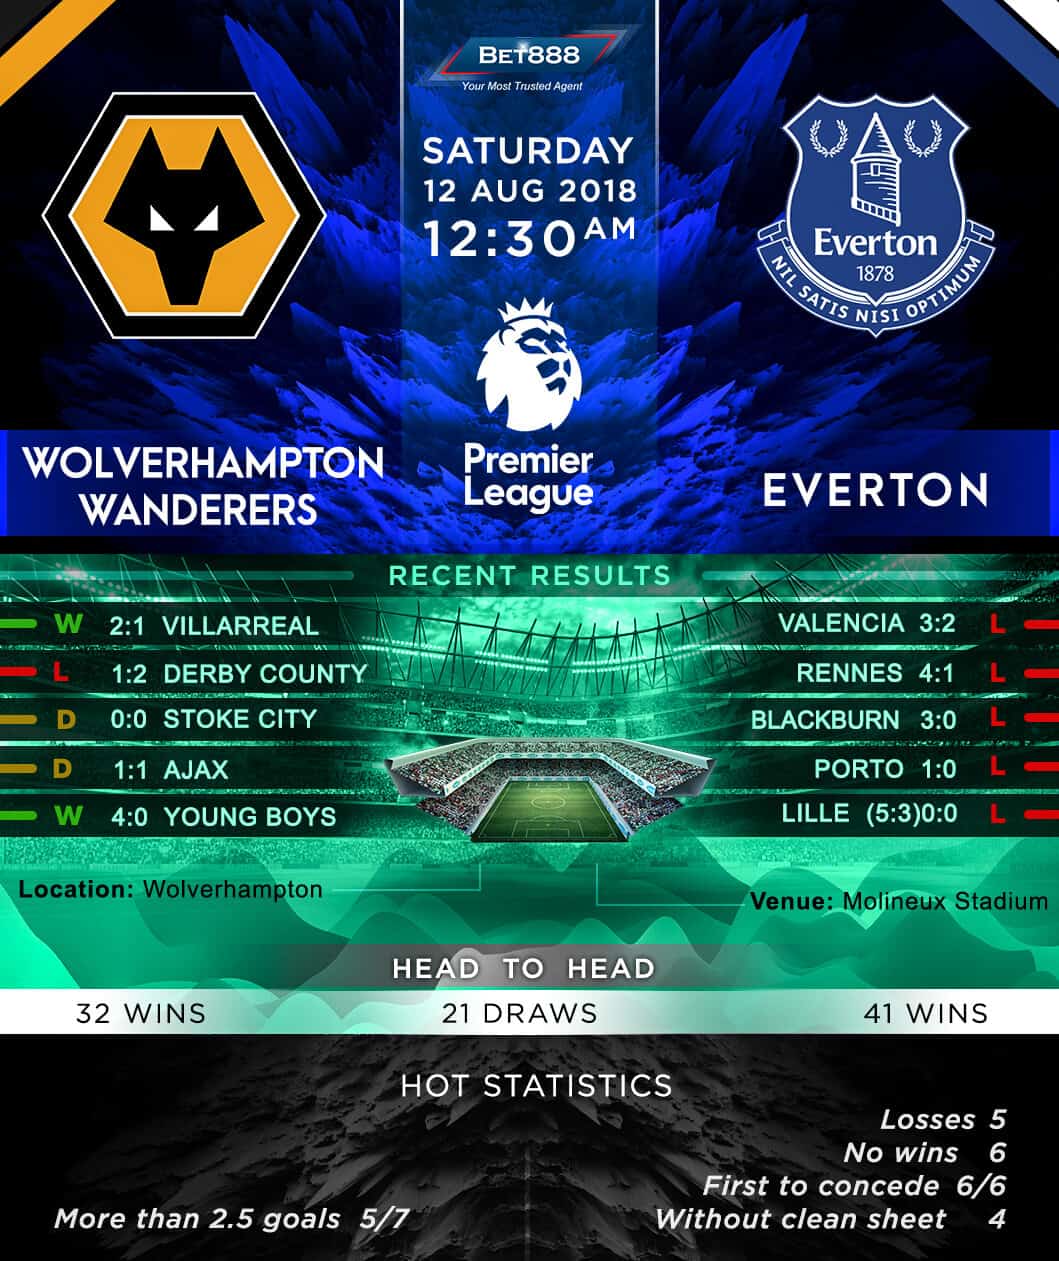 Wolverhampton Wanderers vs Everton 12/08/18